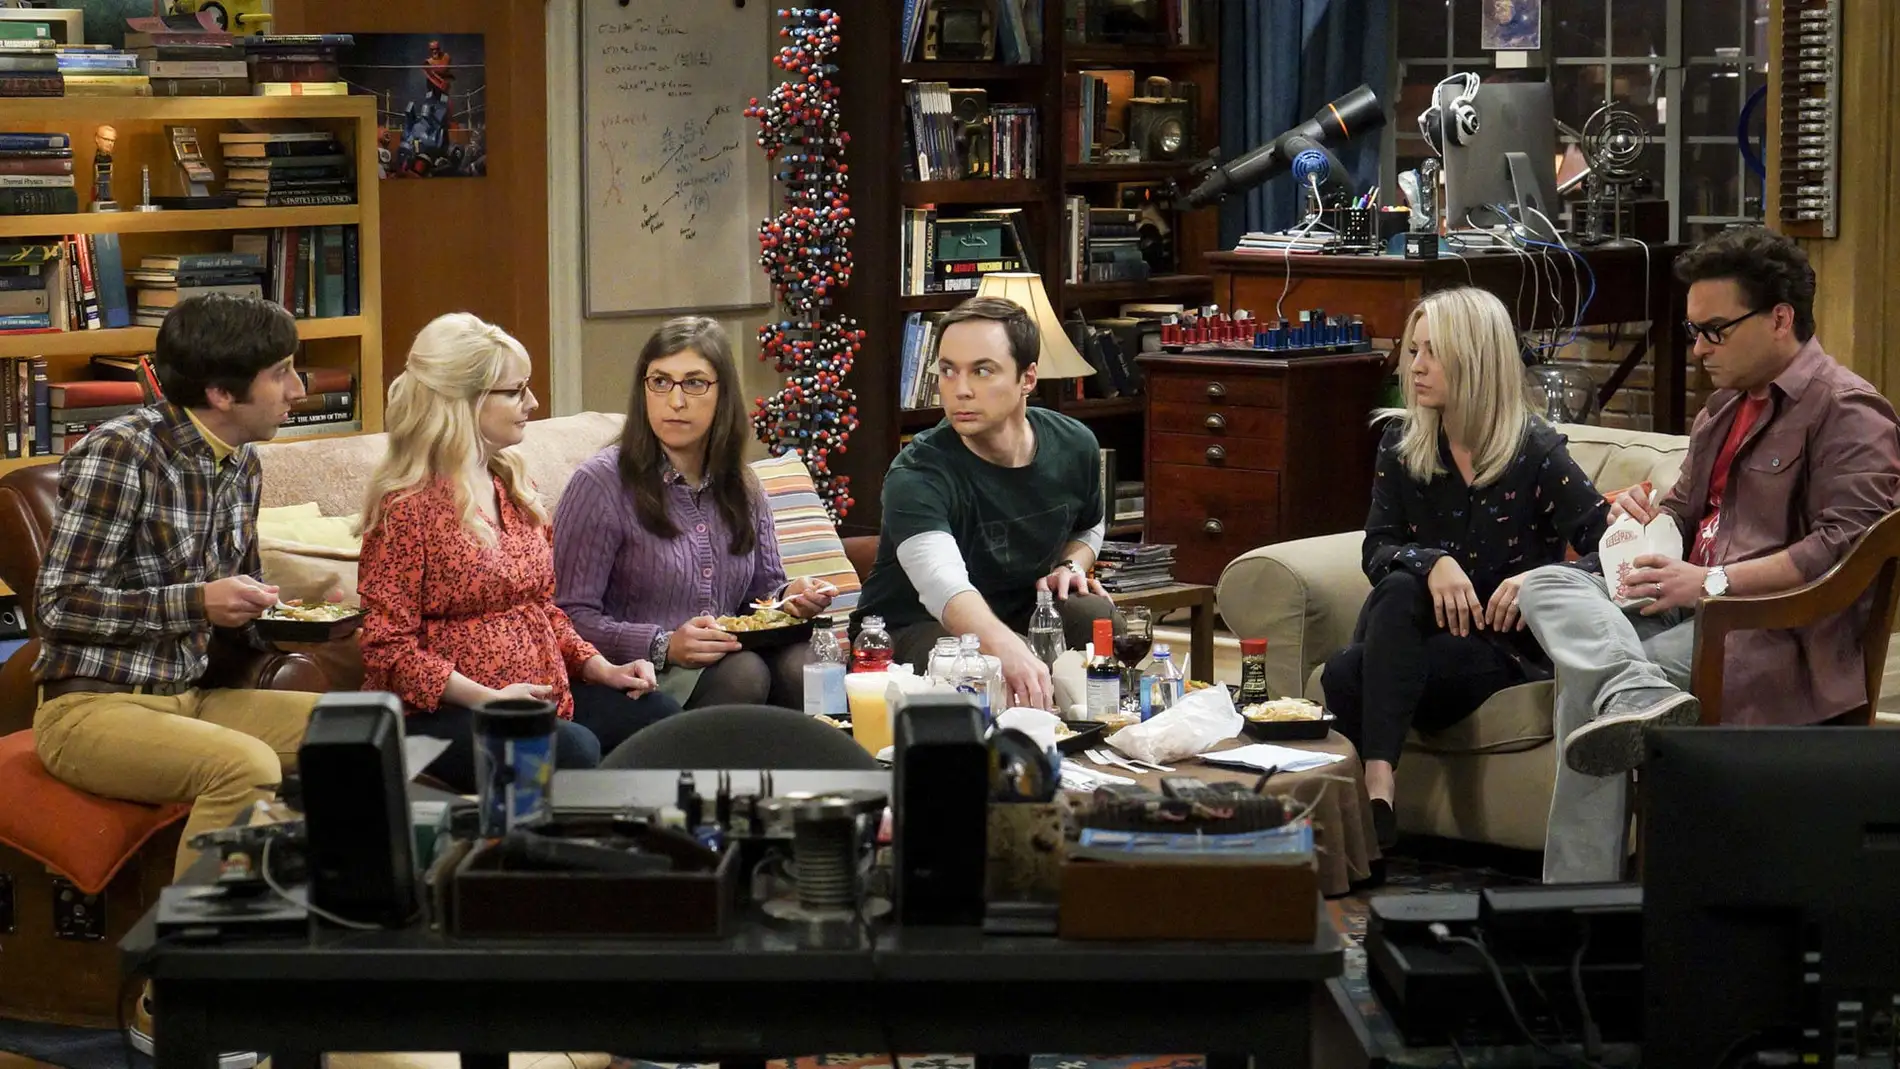 Elenco de 'The Big Bang Theory'